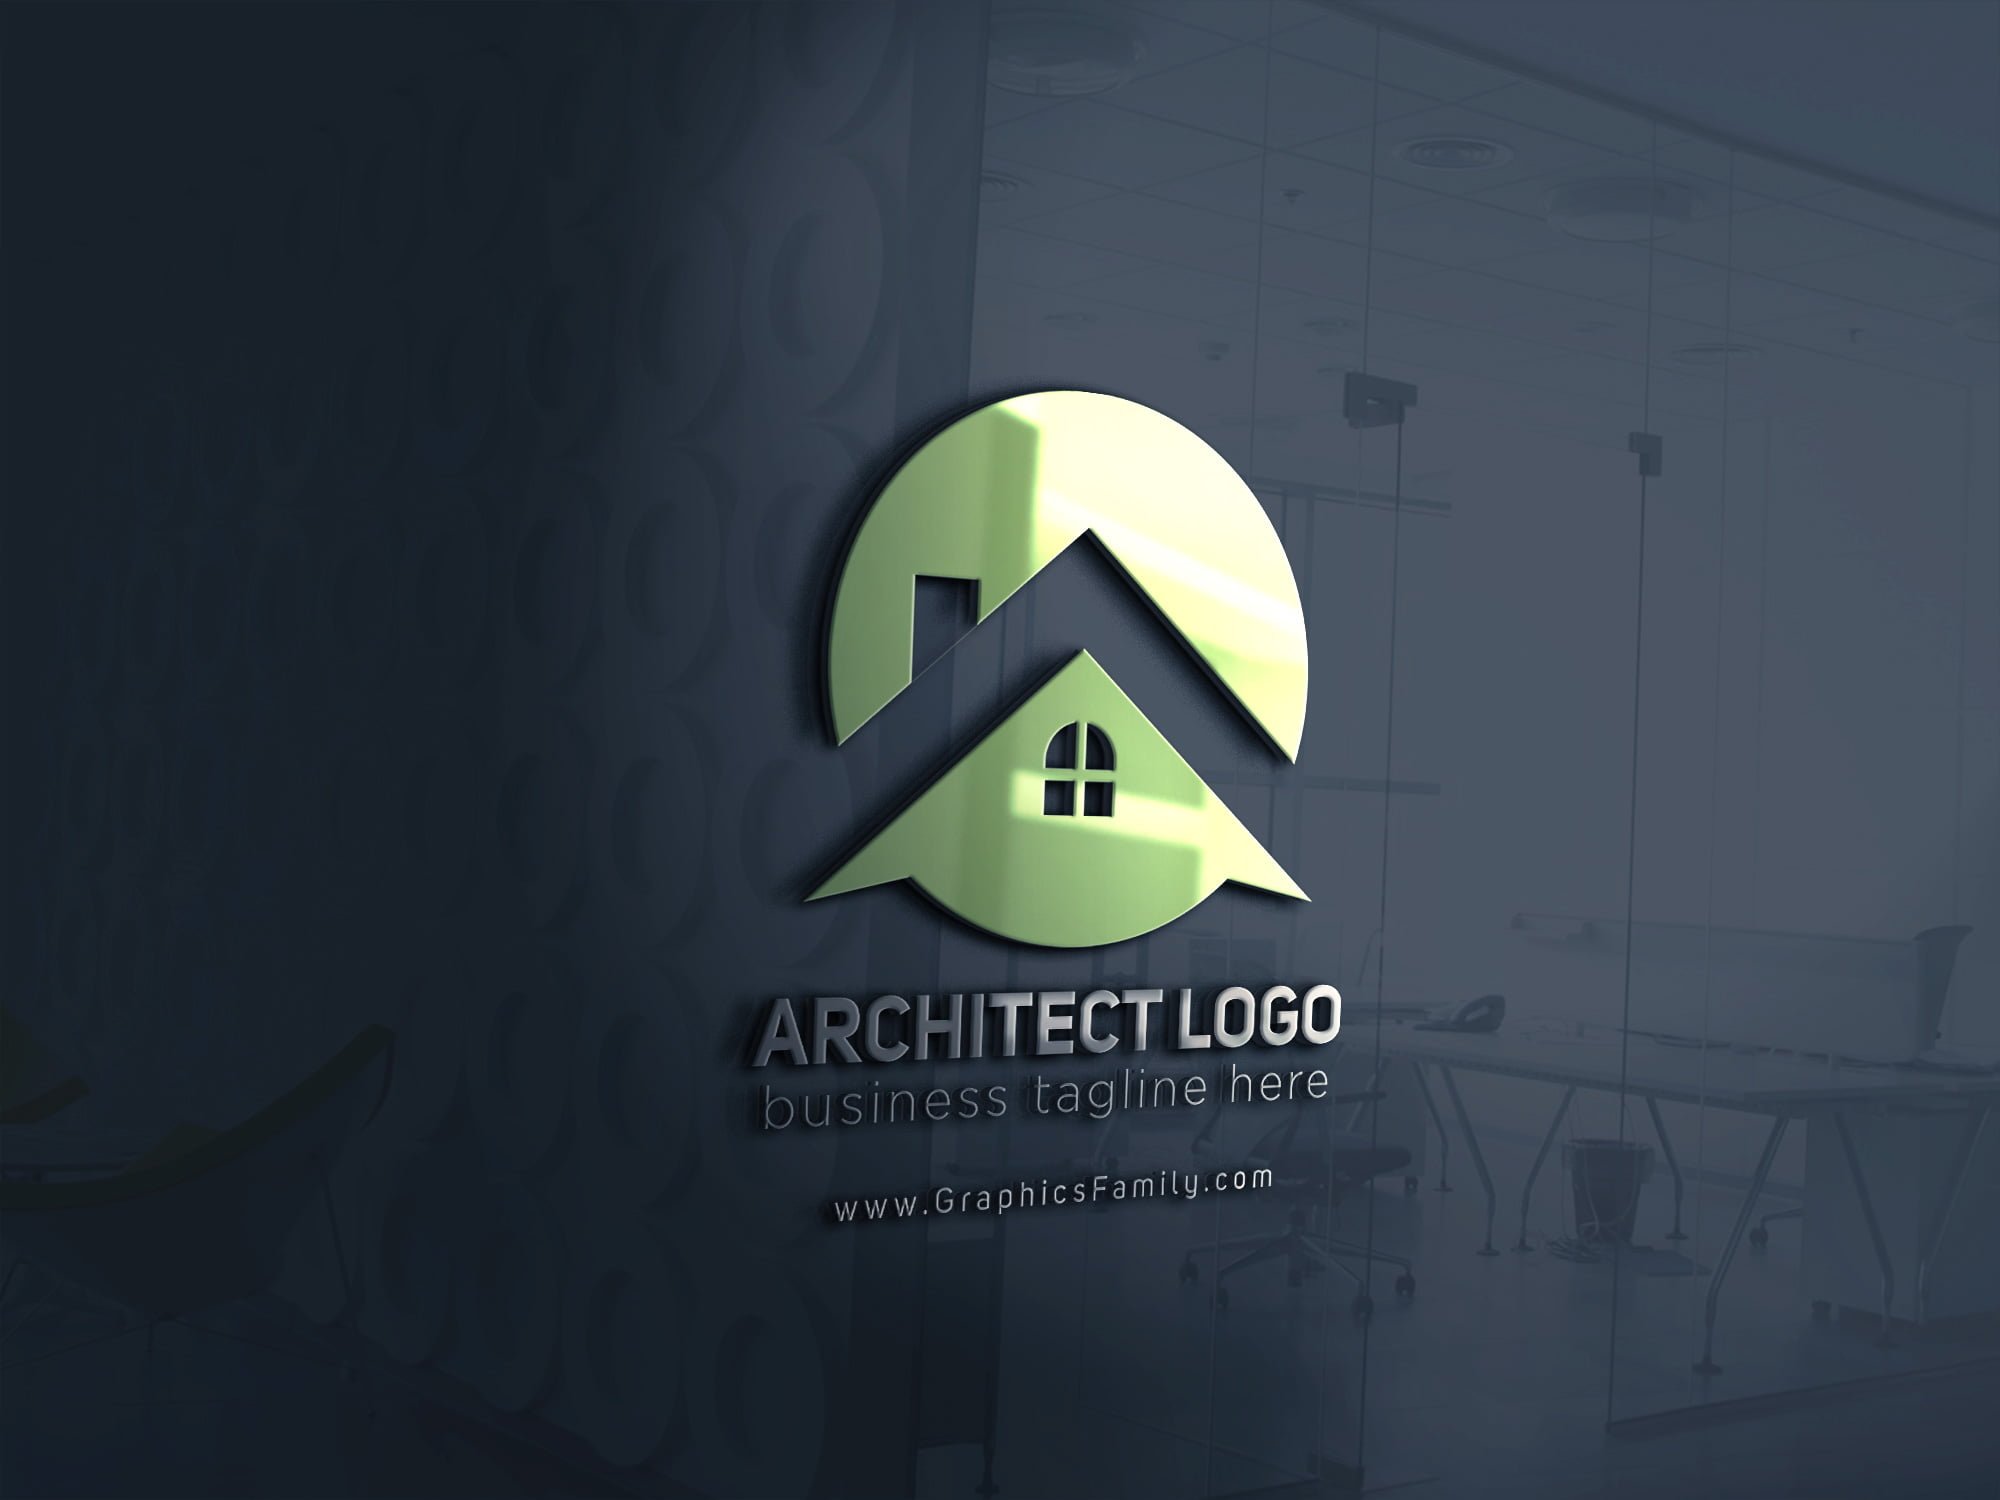 architectural logo ideas 1